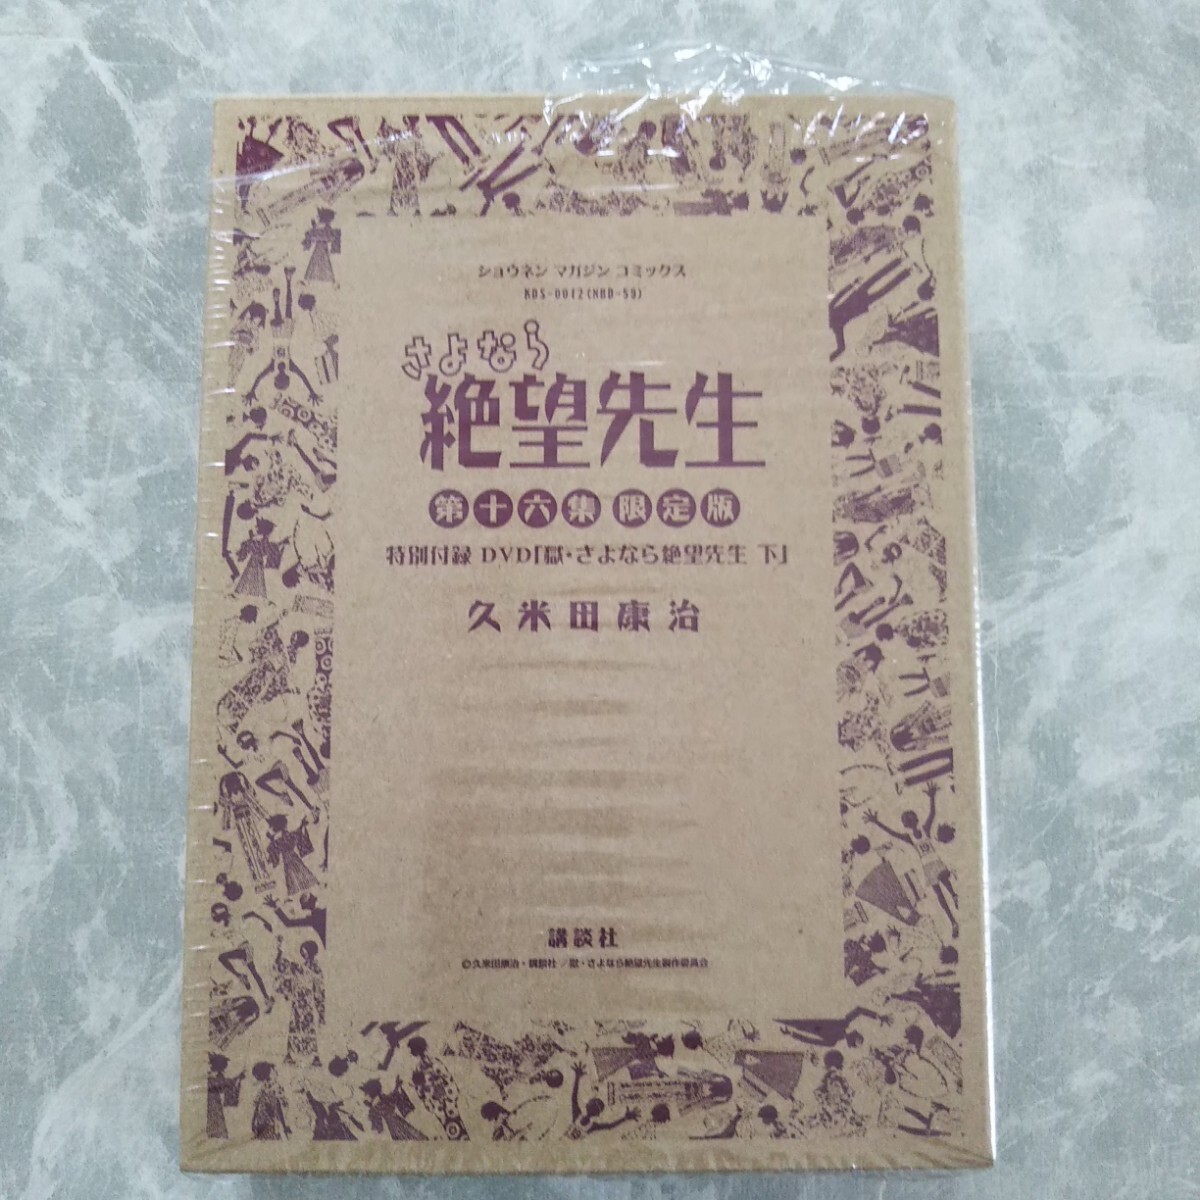 久米田康治 さよなら絶望先生 第十六集 限定版 DVD付初回限定版 16巻